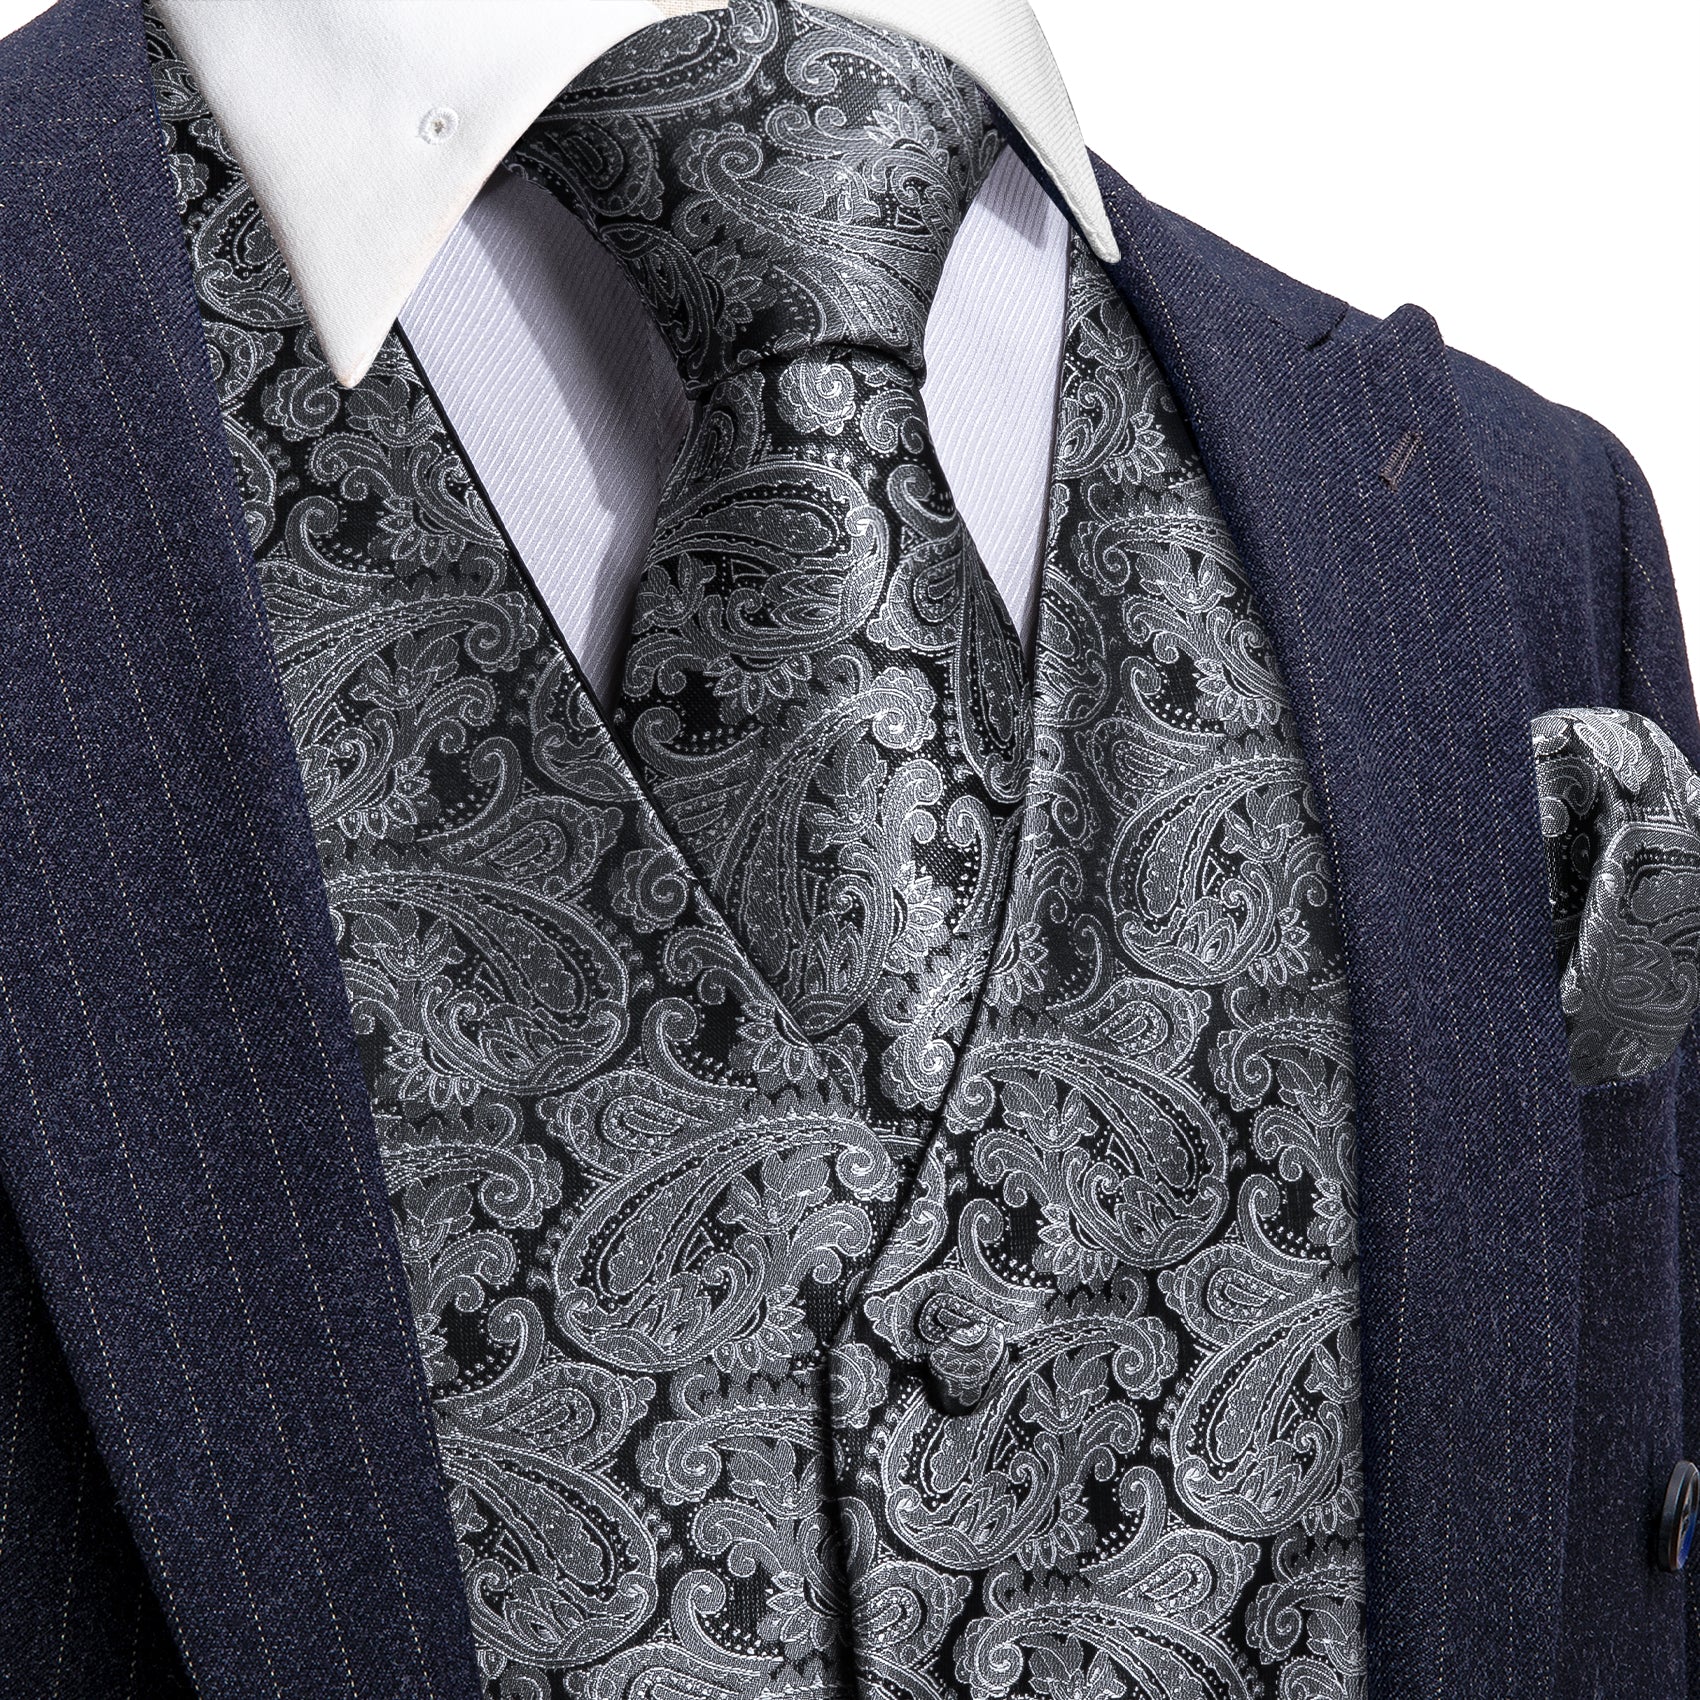 Grey Black Paisley Silk Vest Necktie Pocket square Cufflinks